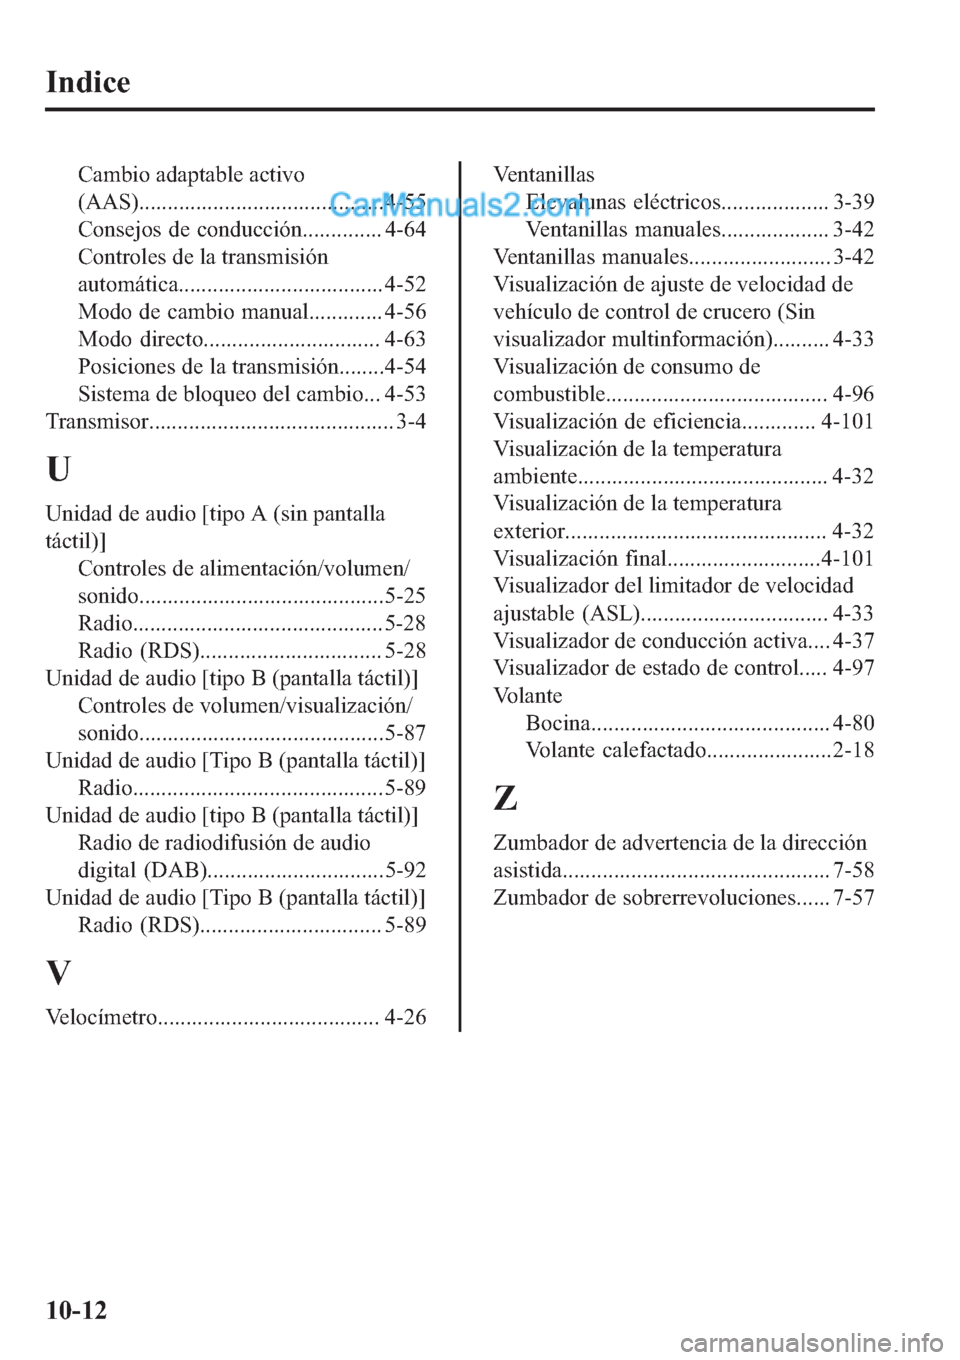 MAZDA MODEL 2 2019  Manual del propietario (in Spanish) �,�Q�G�L�F�H
�&�D�P�E�L�R��D�G�D�S�W�D�E�O�H��D�F�W�L�Y�R
��$�$�6������������������������������������������������
�&�R�Q�V�H�M�R�V� �G�H� �F�R�Q�G�